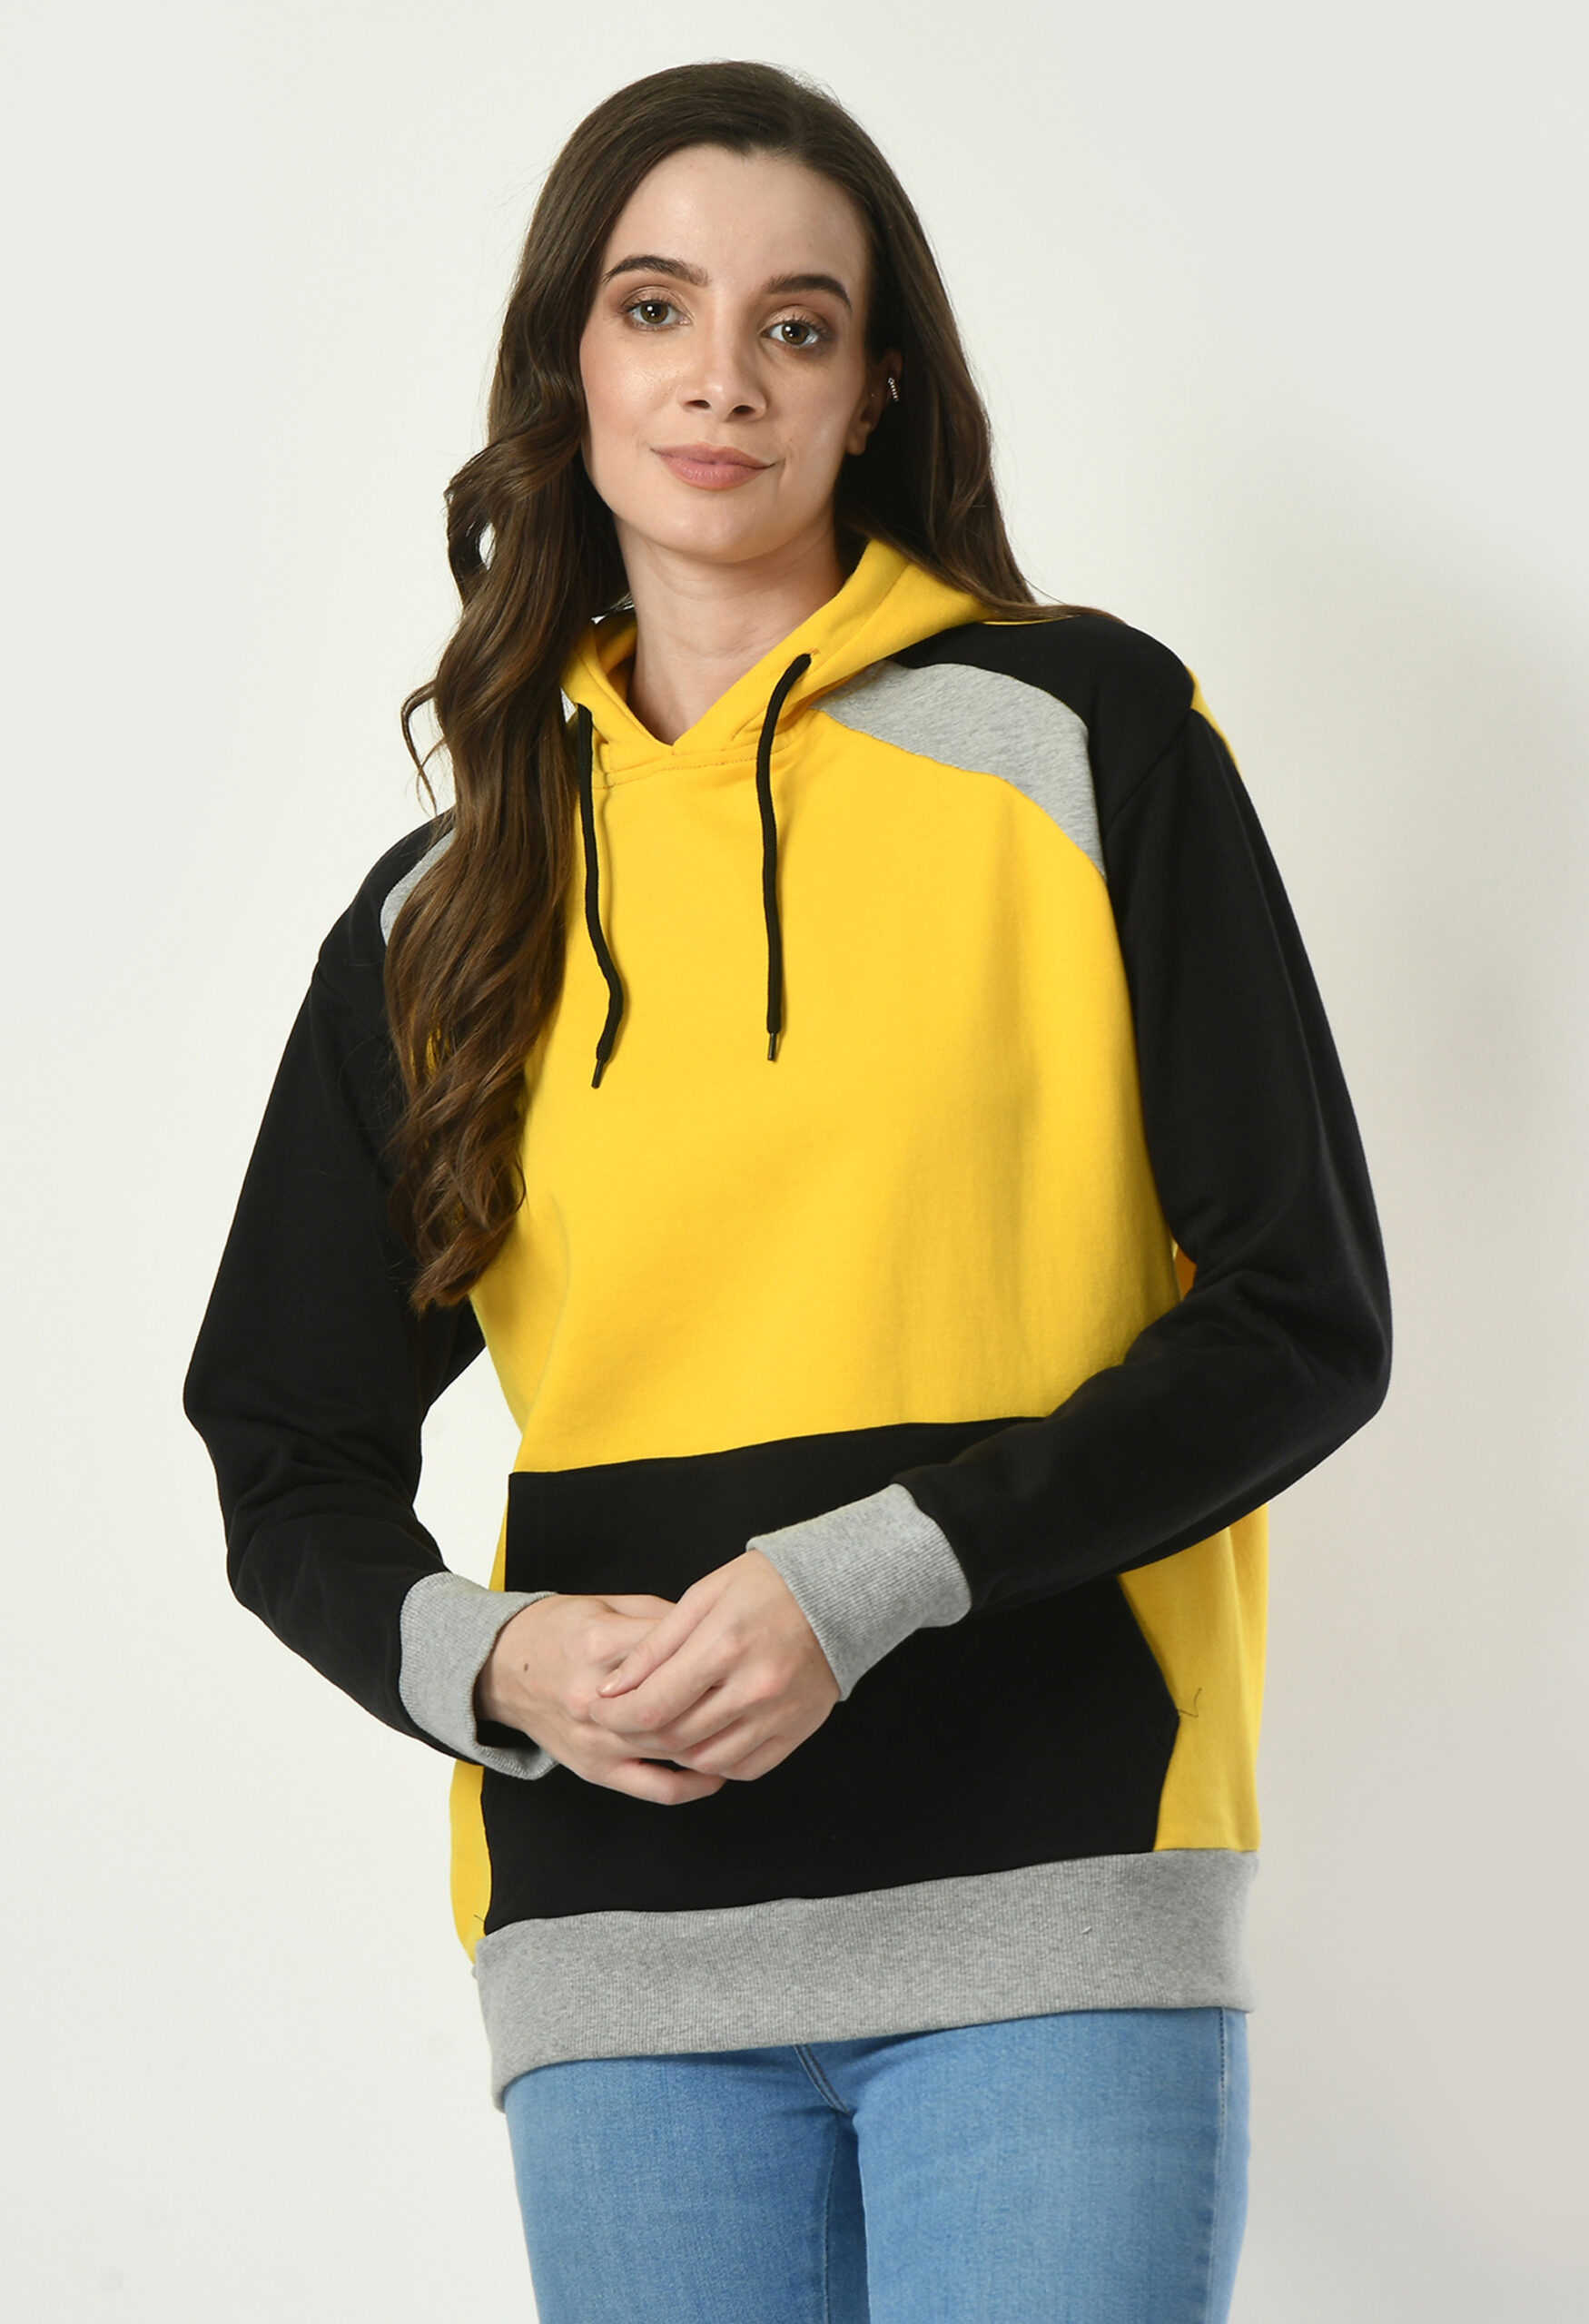 Designer Hoodies for Women - Yellow & Black - 2